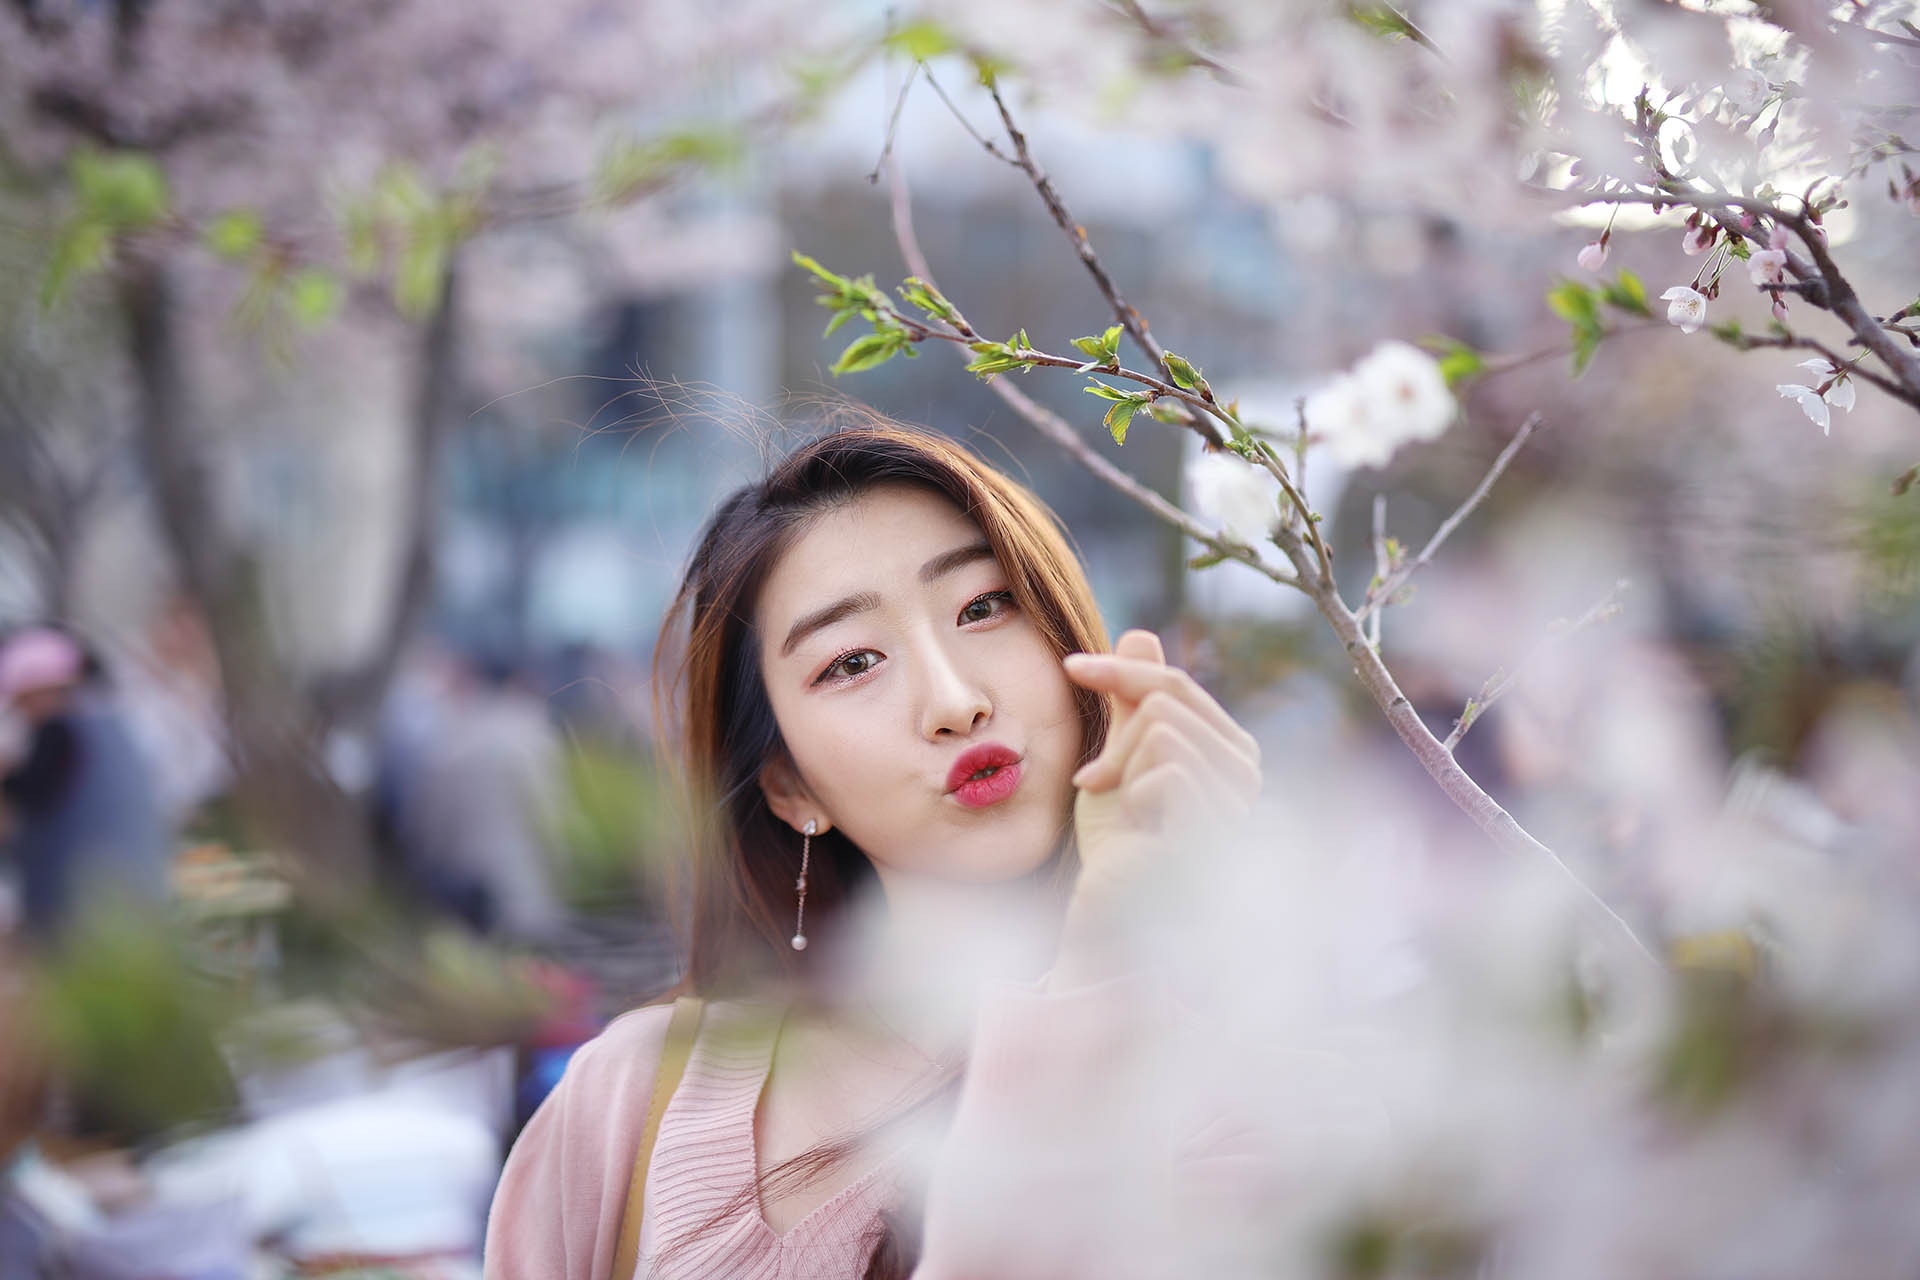 2021 Best Cherry Blossom Spots in Korea